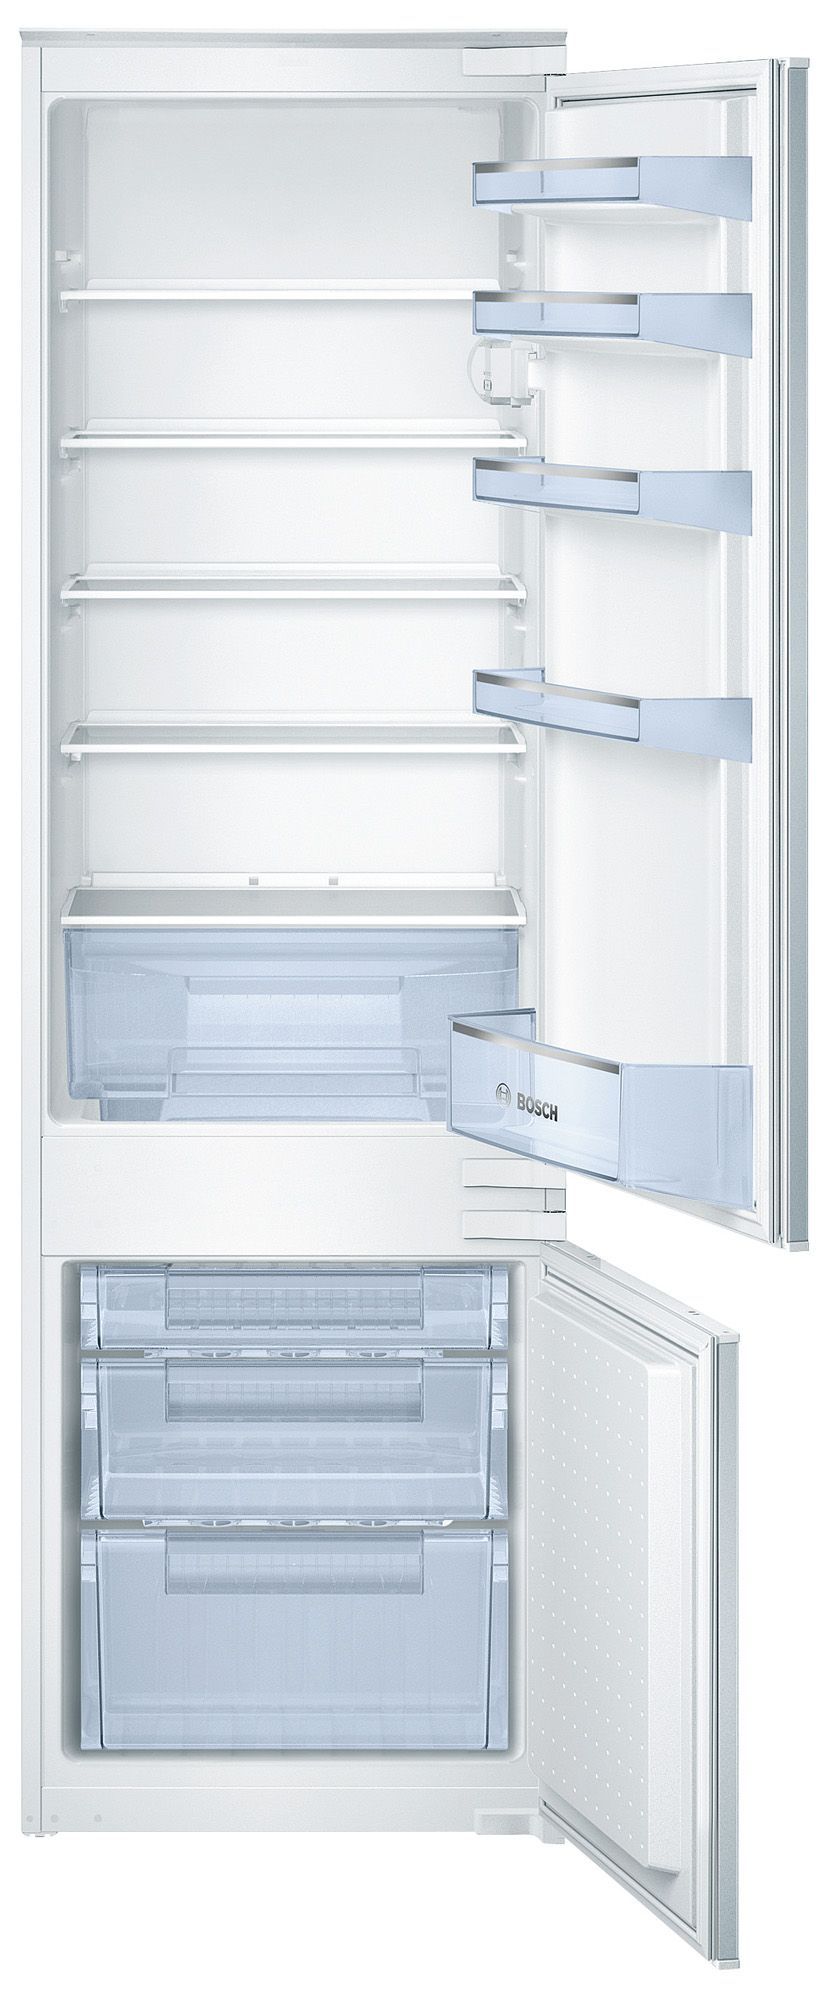 Bosch KIV38X22GB 70:30 Integrated Defrosting Fridge freezer - White